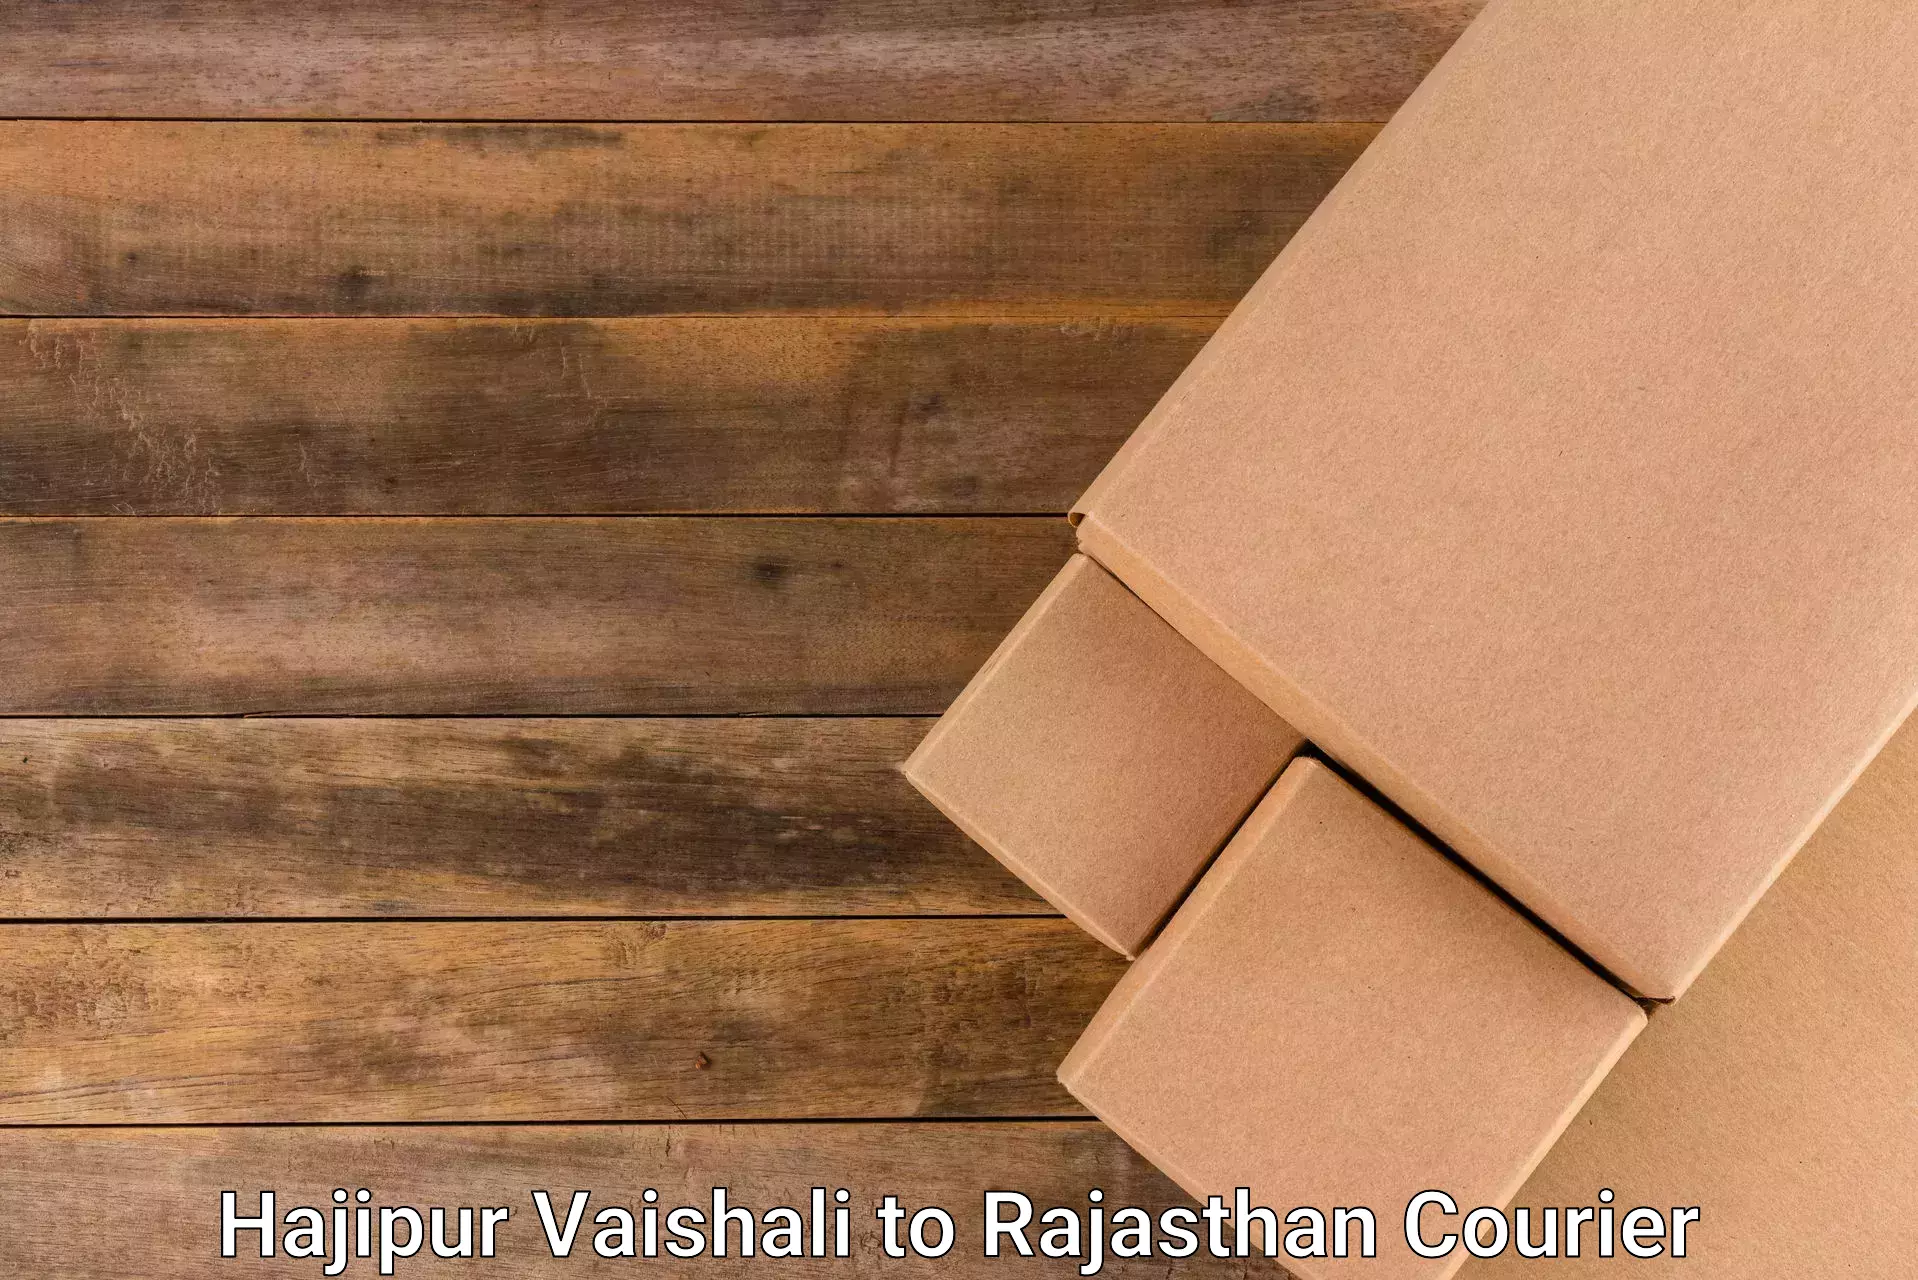 Full-service courier options Hajipur Vaishali to Sujangarh